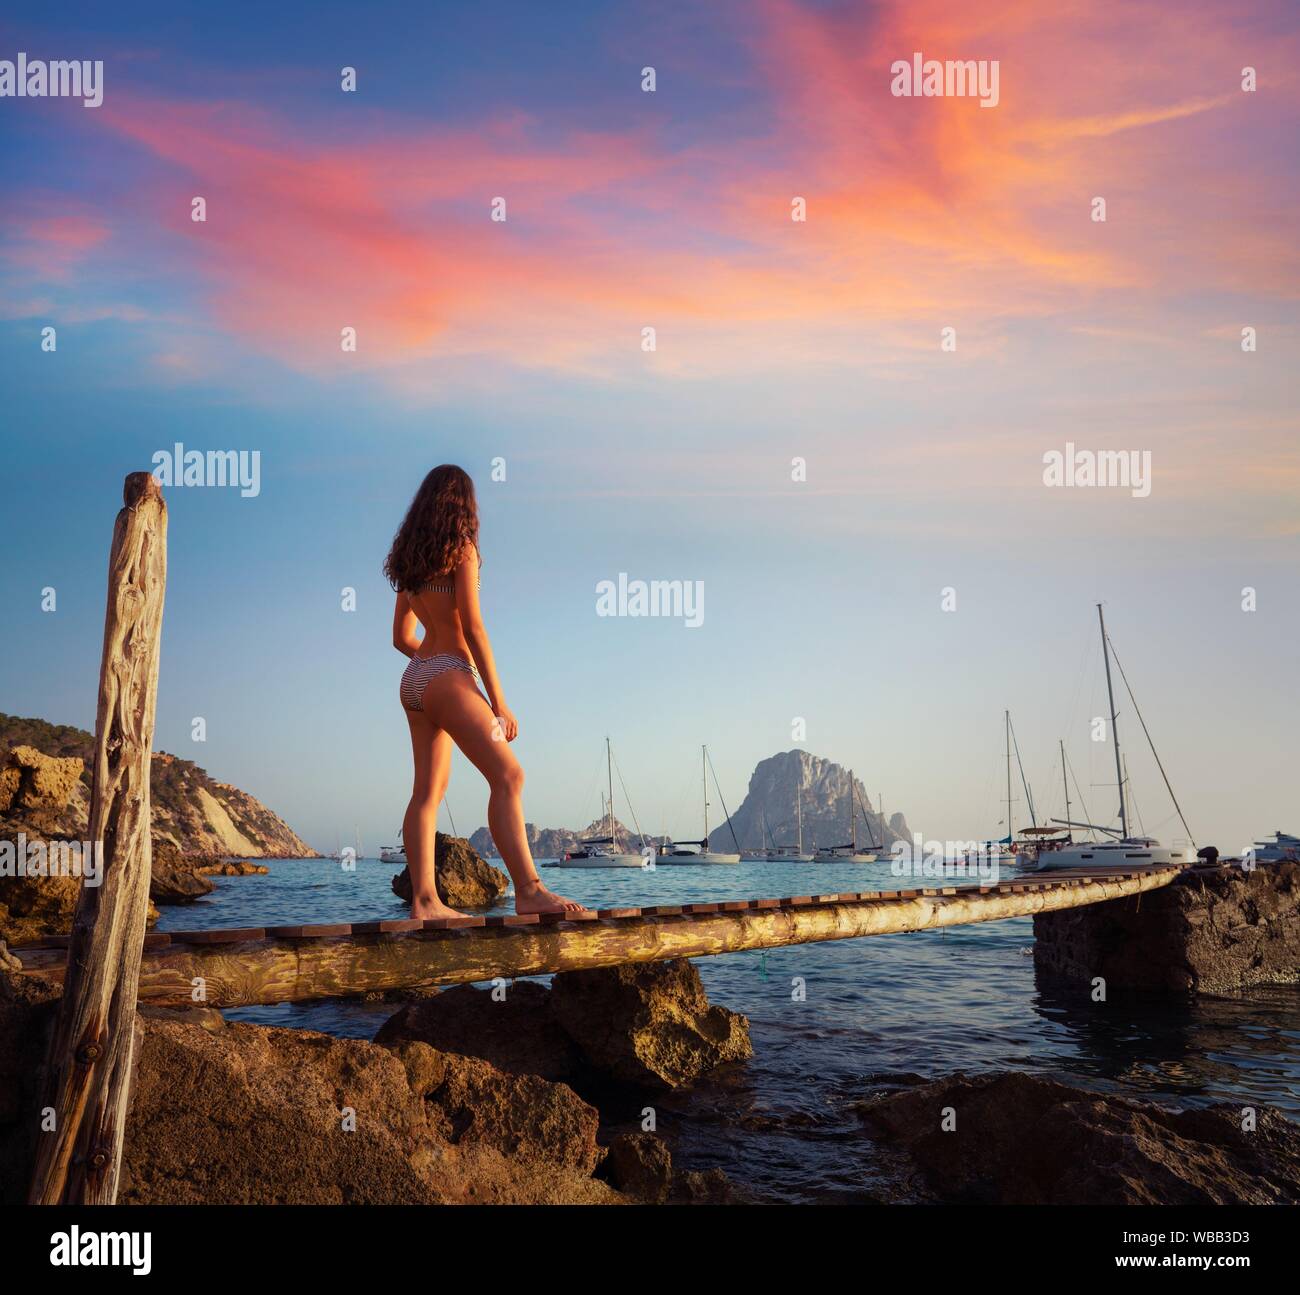 Ibiza cala d Hort girl on pier sunset Es Vedra islet Balearic Islands. Stock Photo